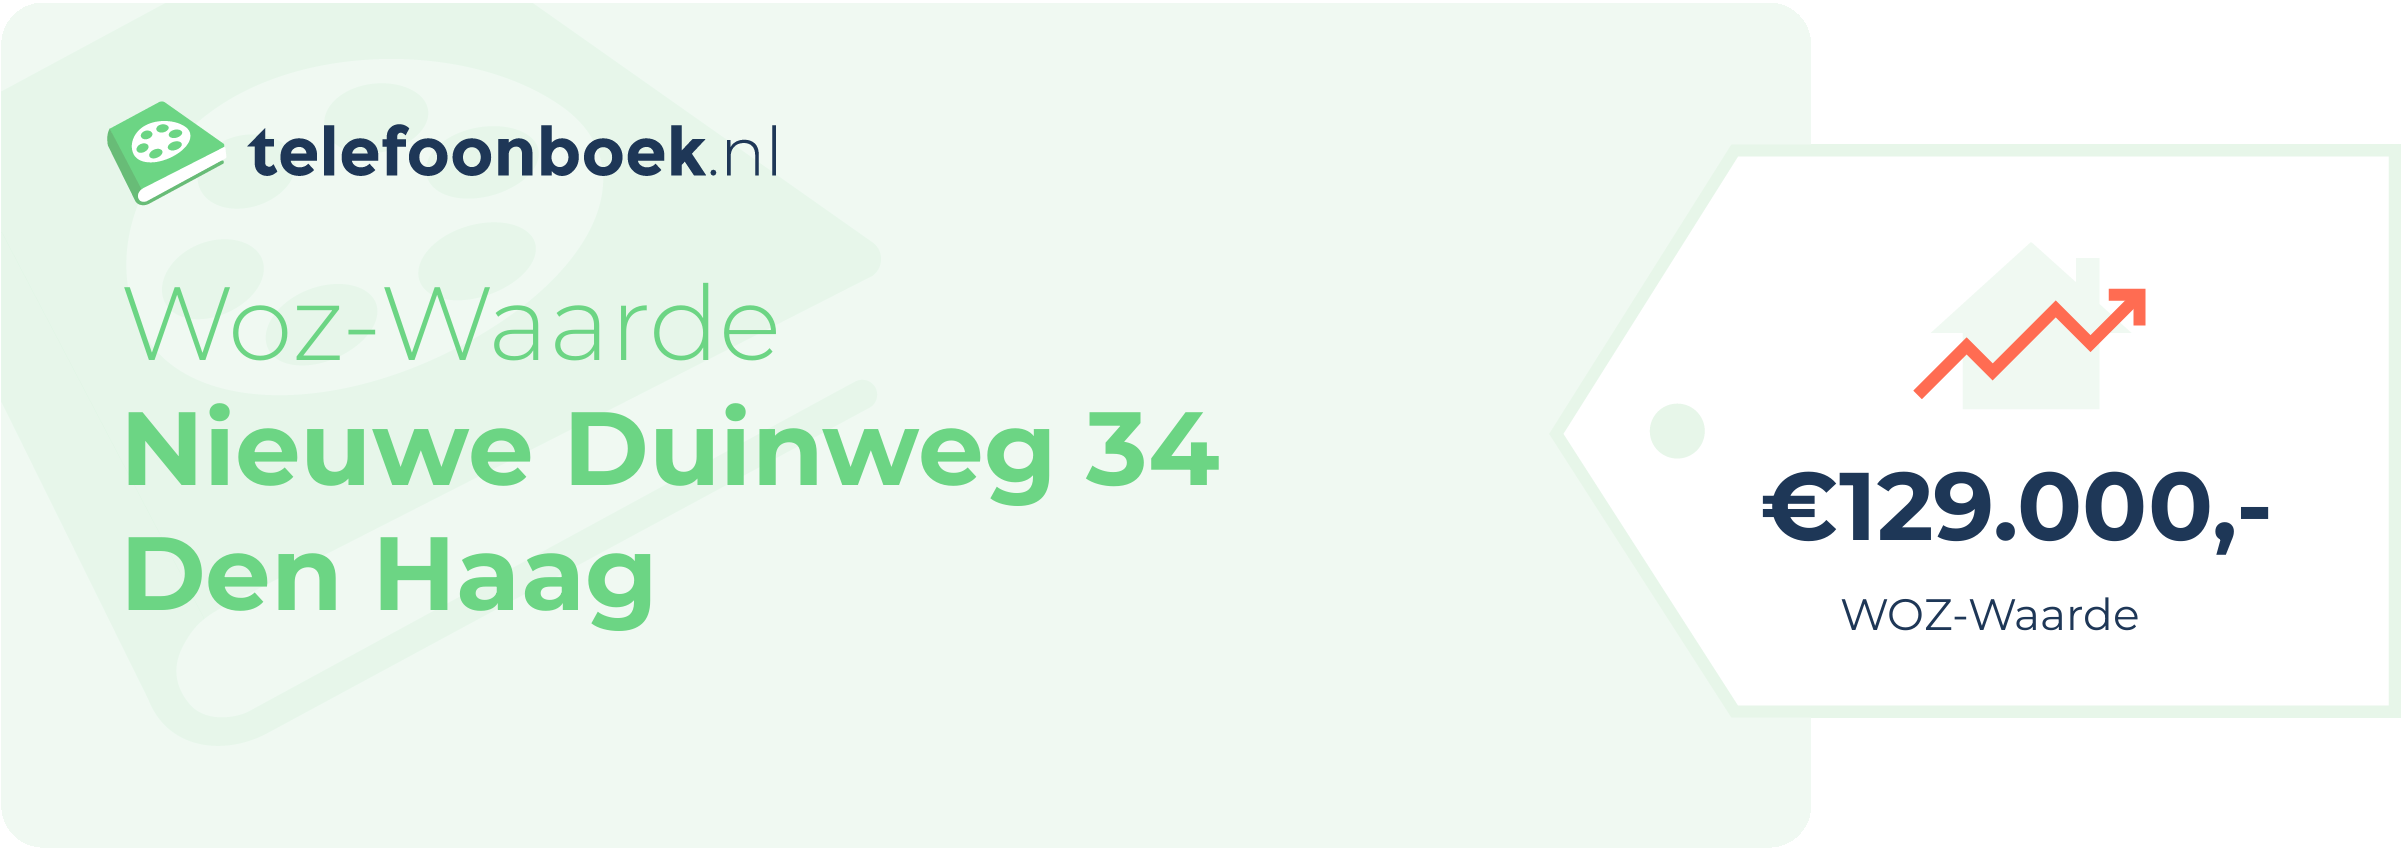 WOZ-waarde Nieuwe Duinweg 34 Den Haag